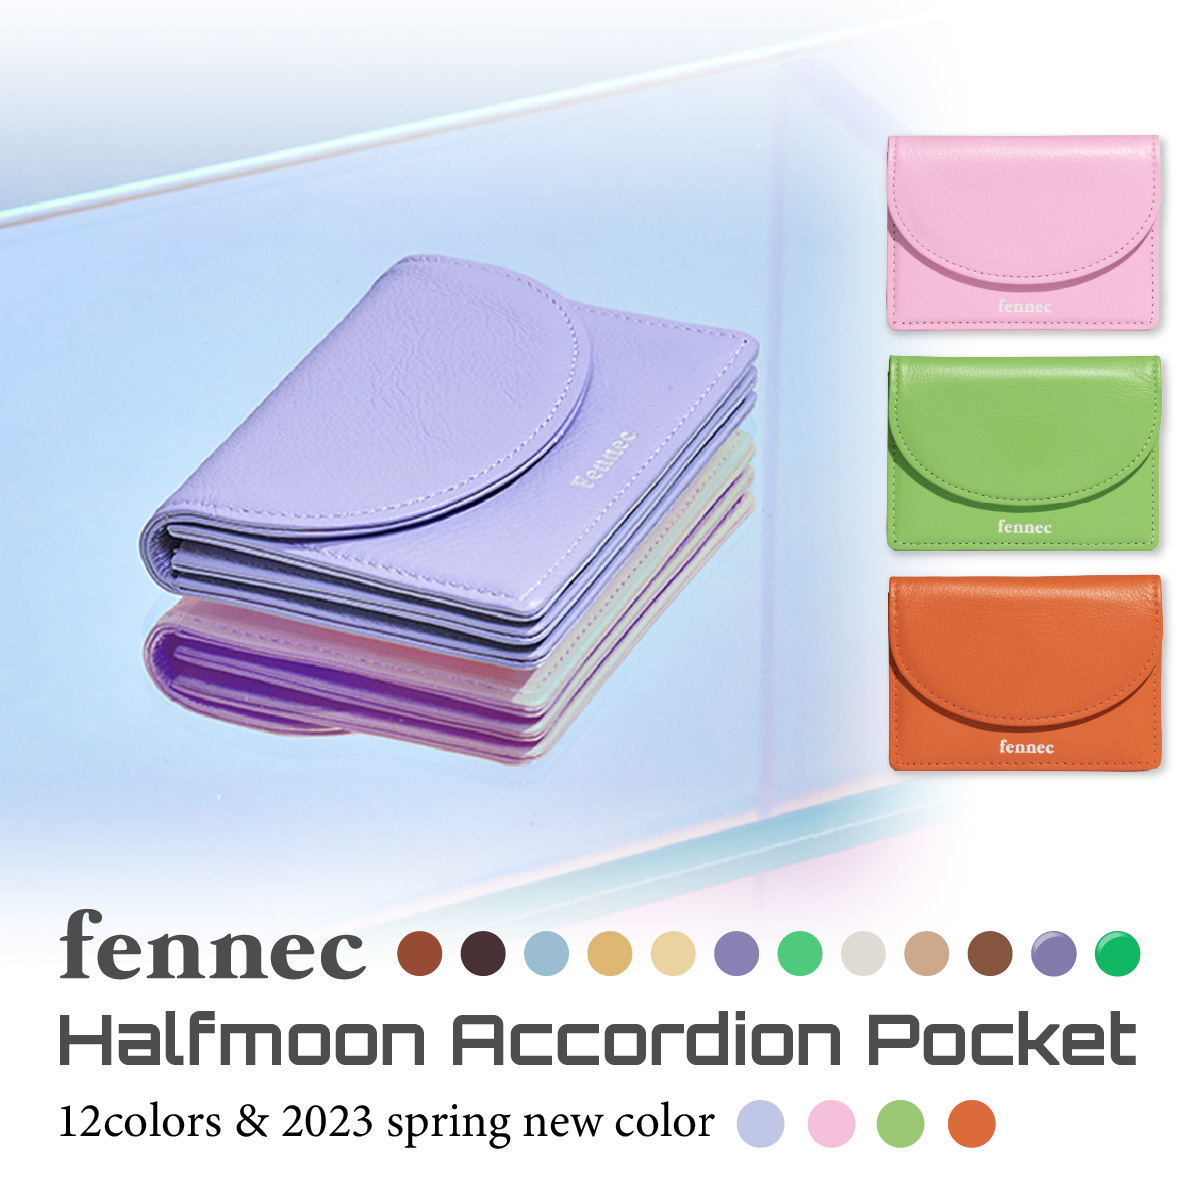 fennec Halfmoon Accordion Pocket フェネック  小物入れ レディース レザー 韓国 ファッション  旅行 女子 誕生日プレゼント おしゃれ  